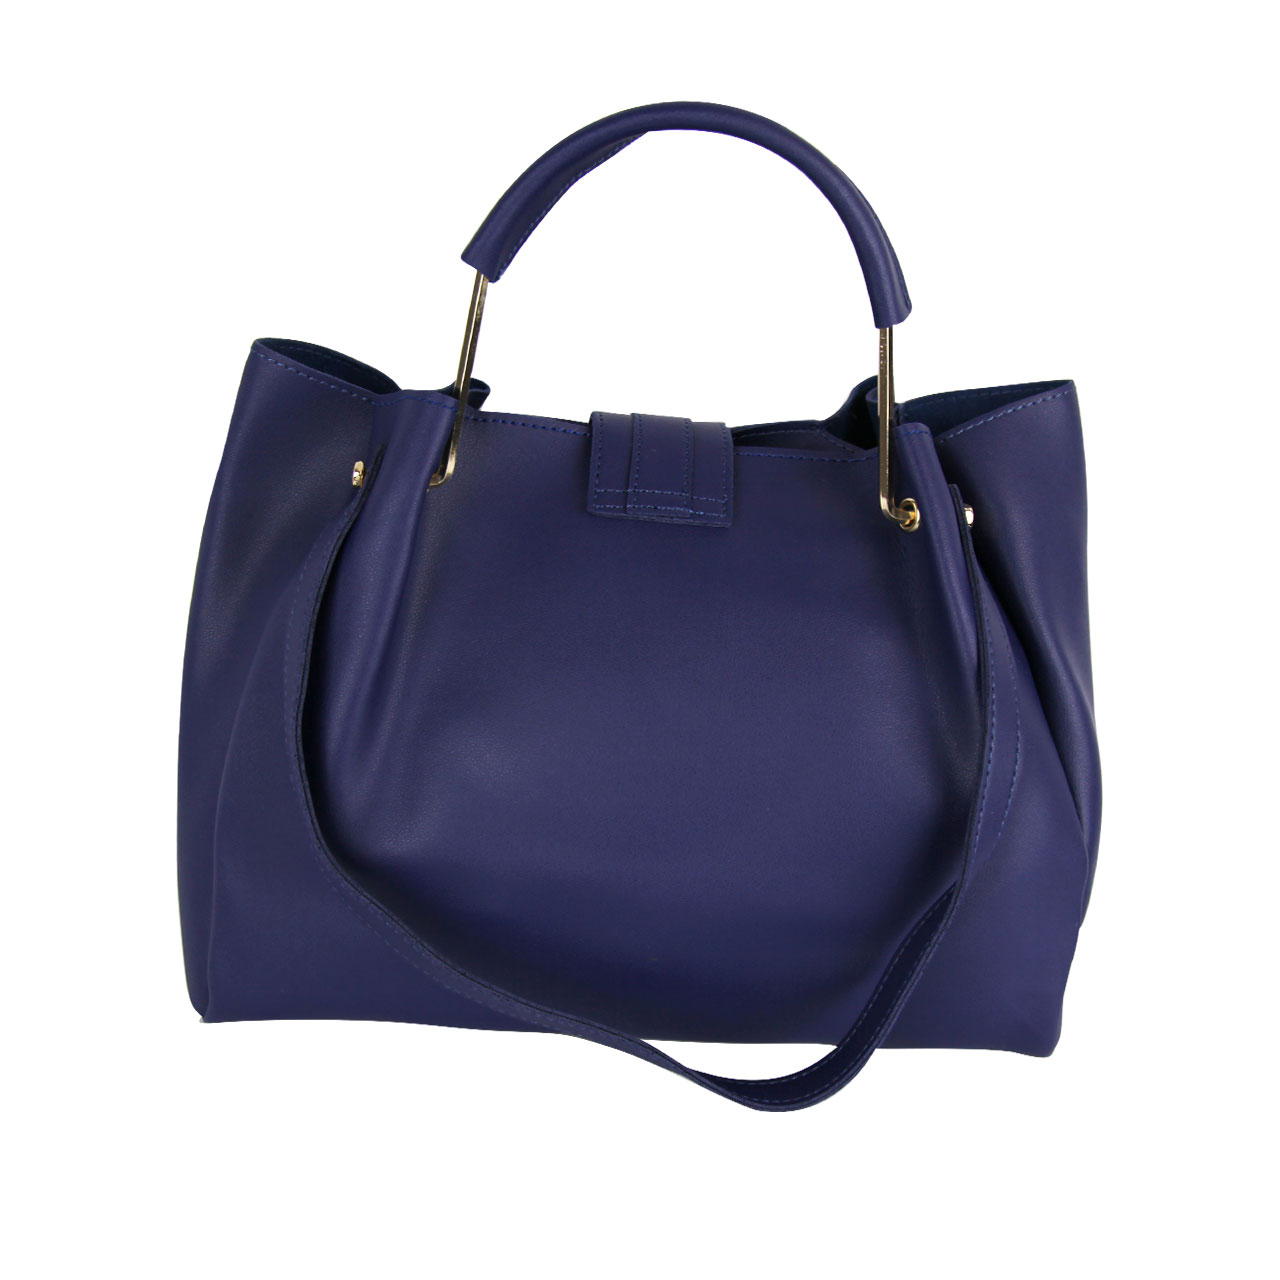 PU Leather Teal Blue / Green Handbag Purse Bag Set For Women